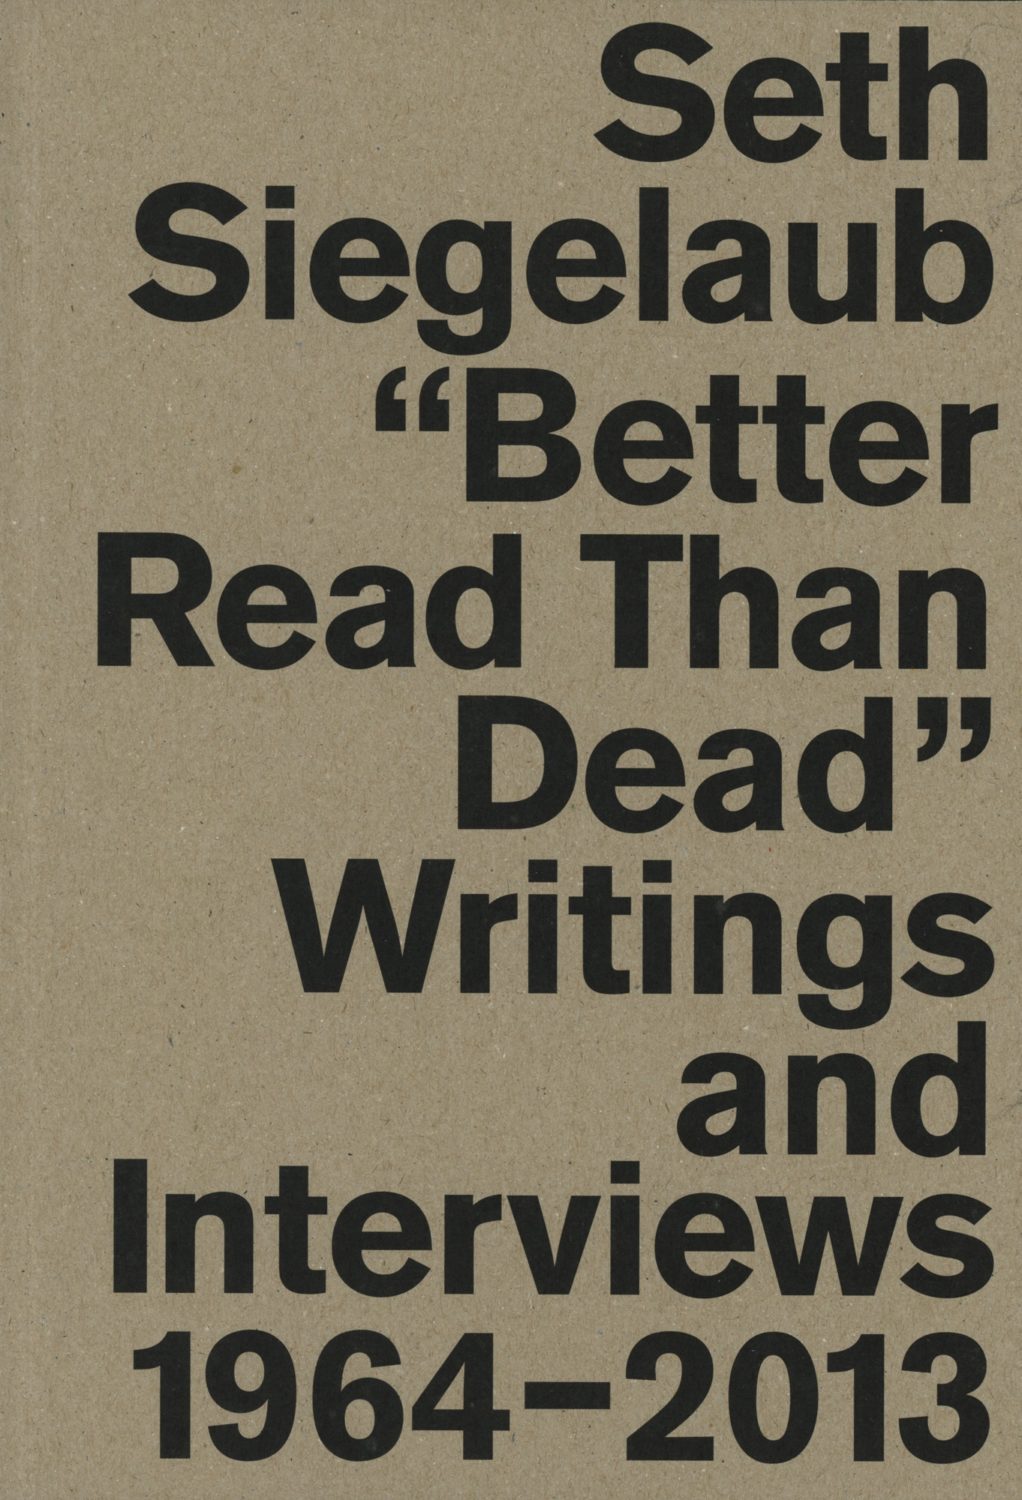 Seth Siegelaub “Better Read Than Dead” Writings and Interviews 1964 – 2013